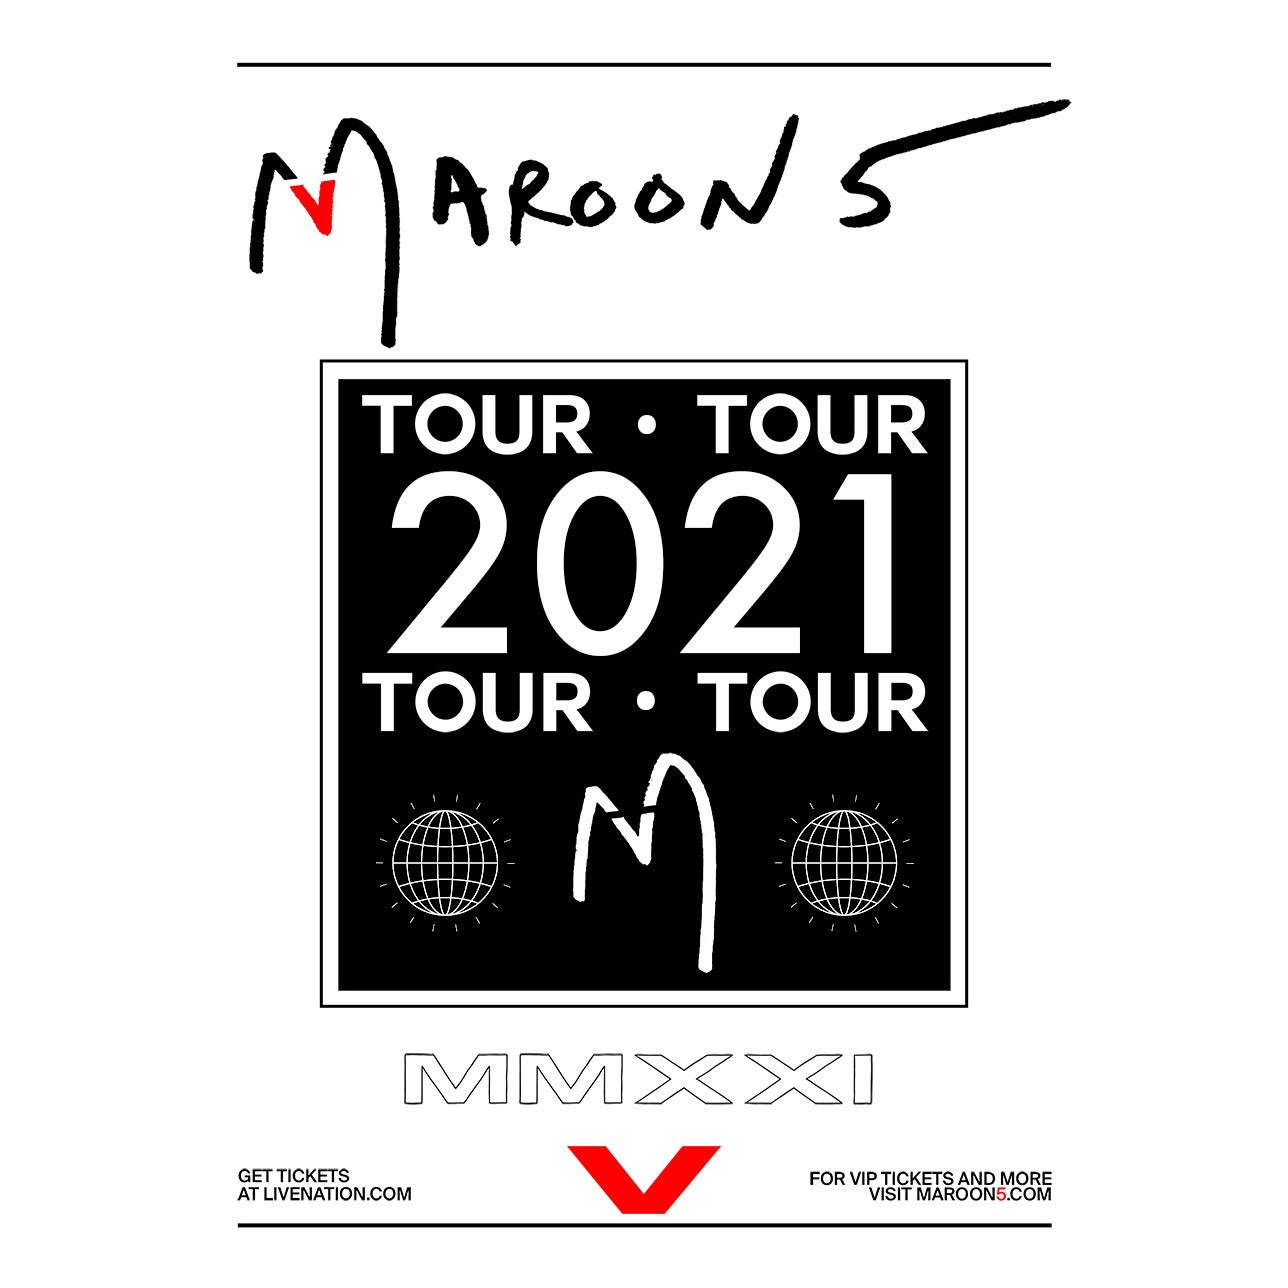 Canceled - Maroon 5